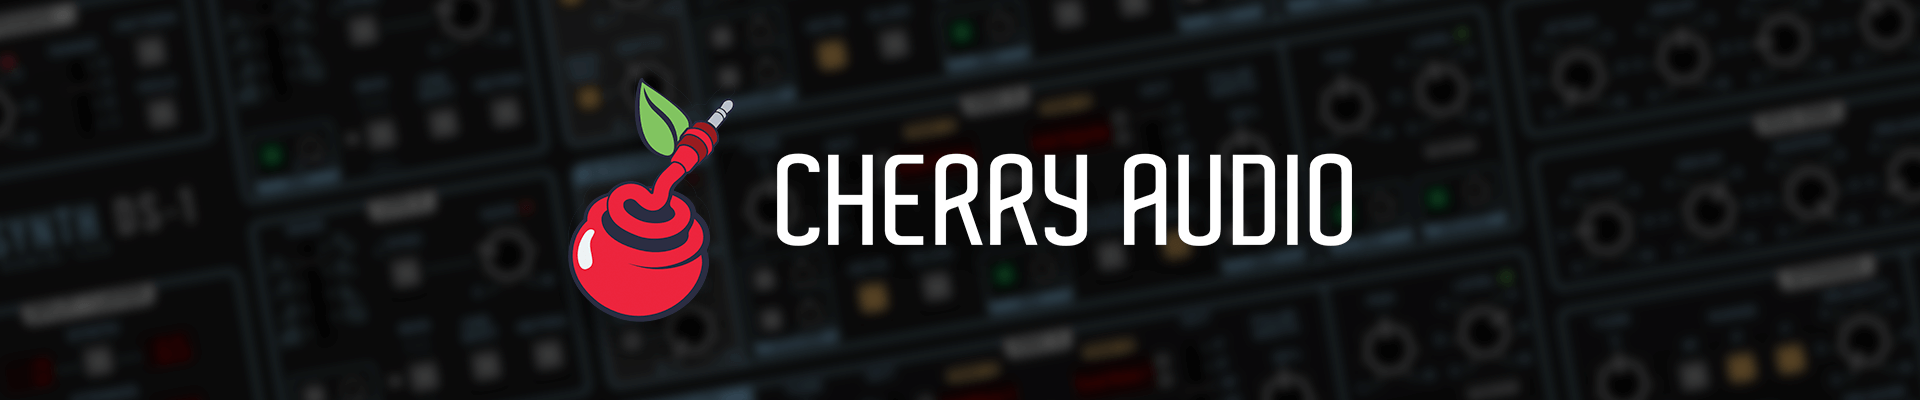 Cherry Audio Banner